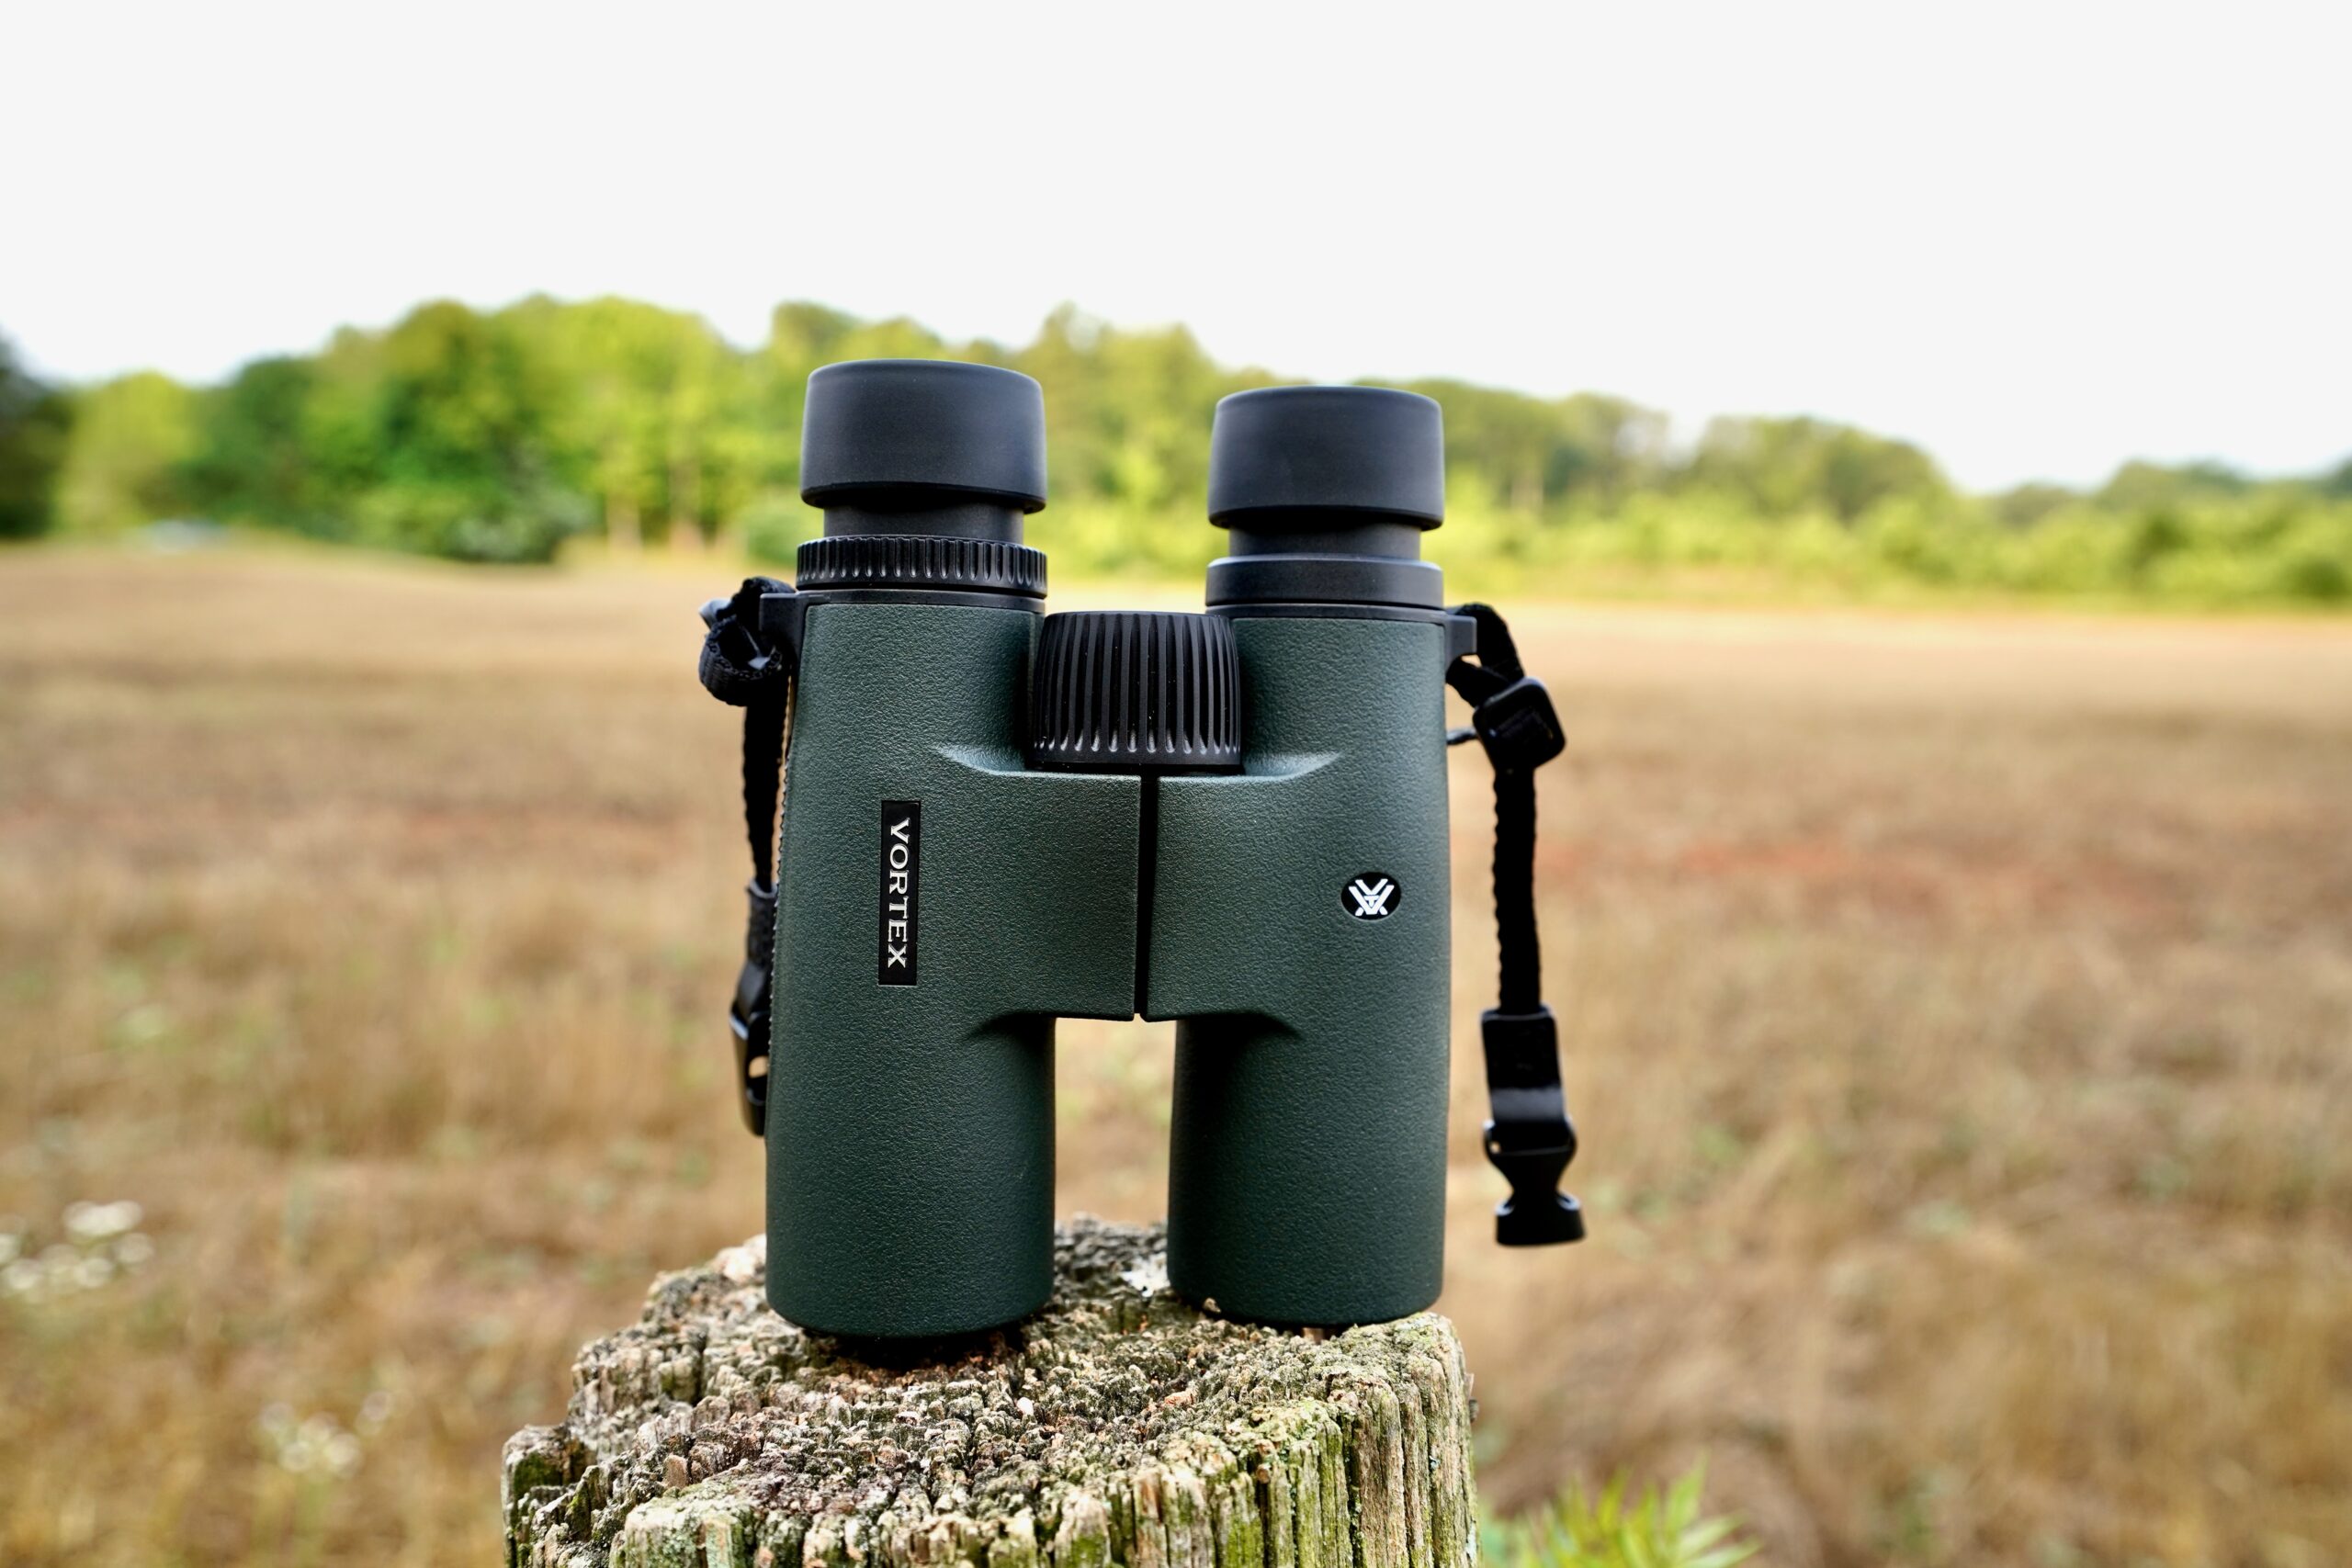 Vortex Triumph HD Binocular Review: Field Testing a New $100 Bino